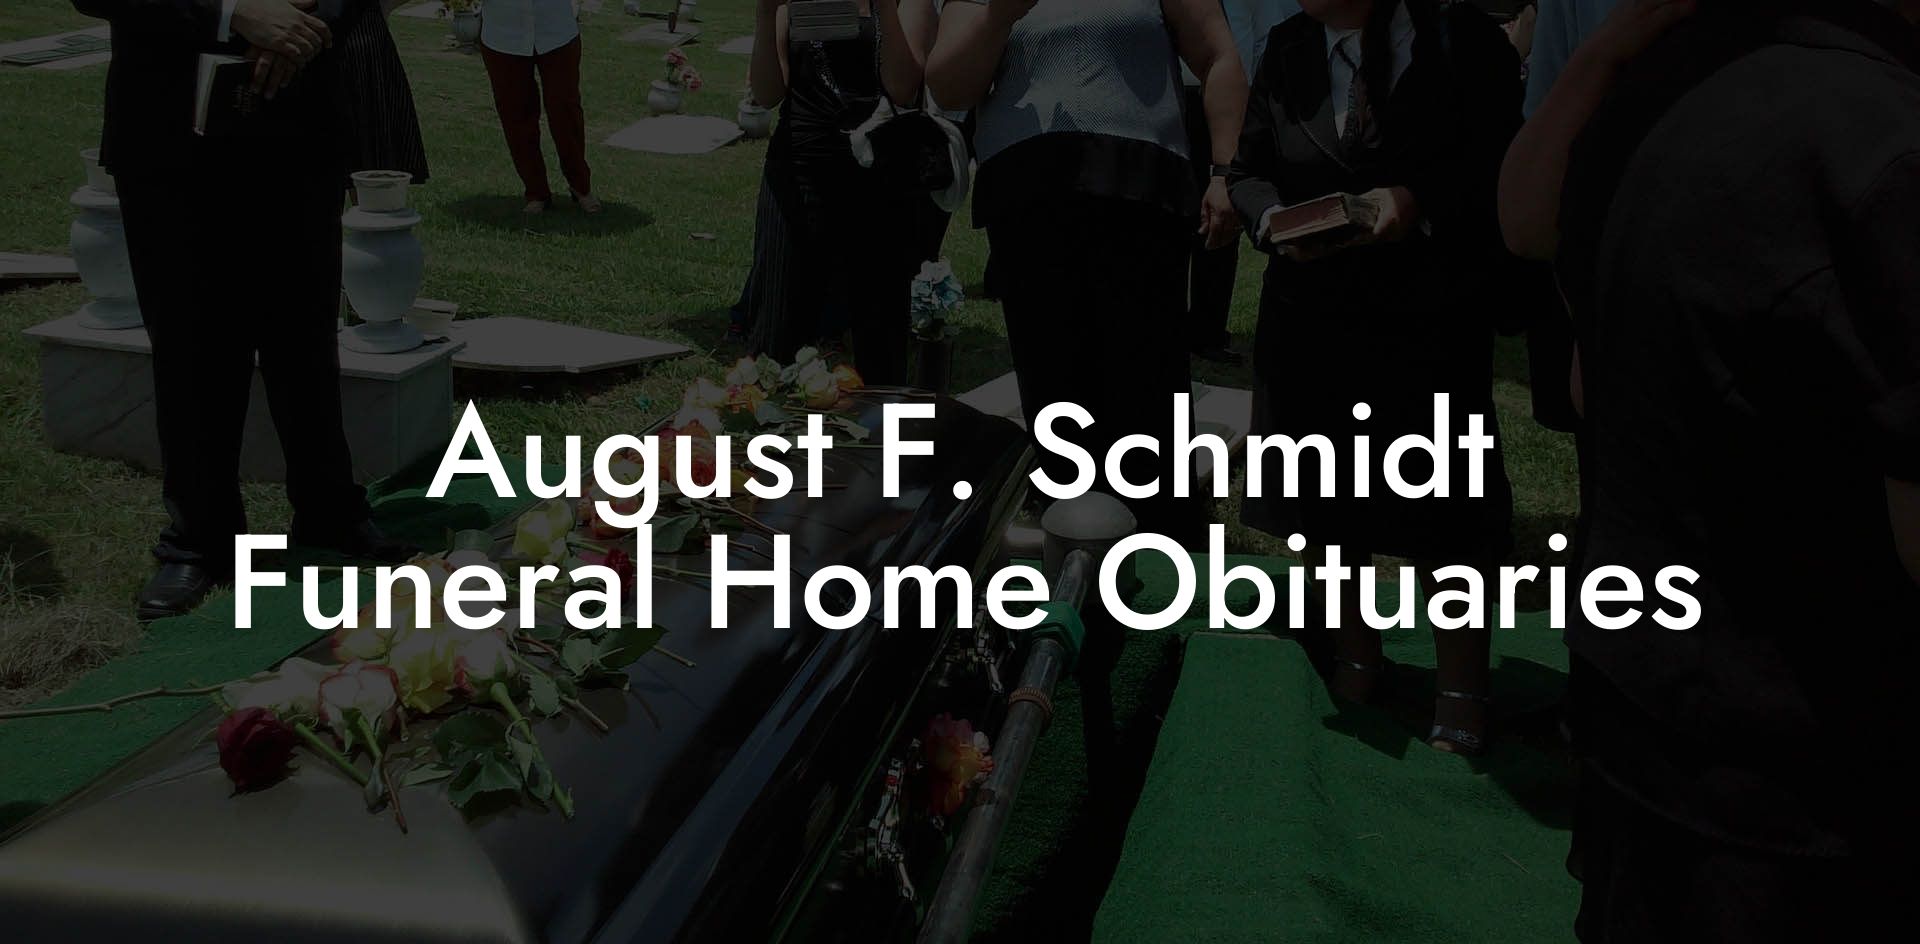 August F. Schmidt Funeral Home Obituaries